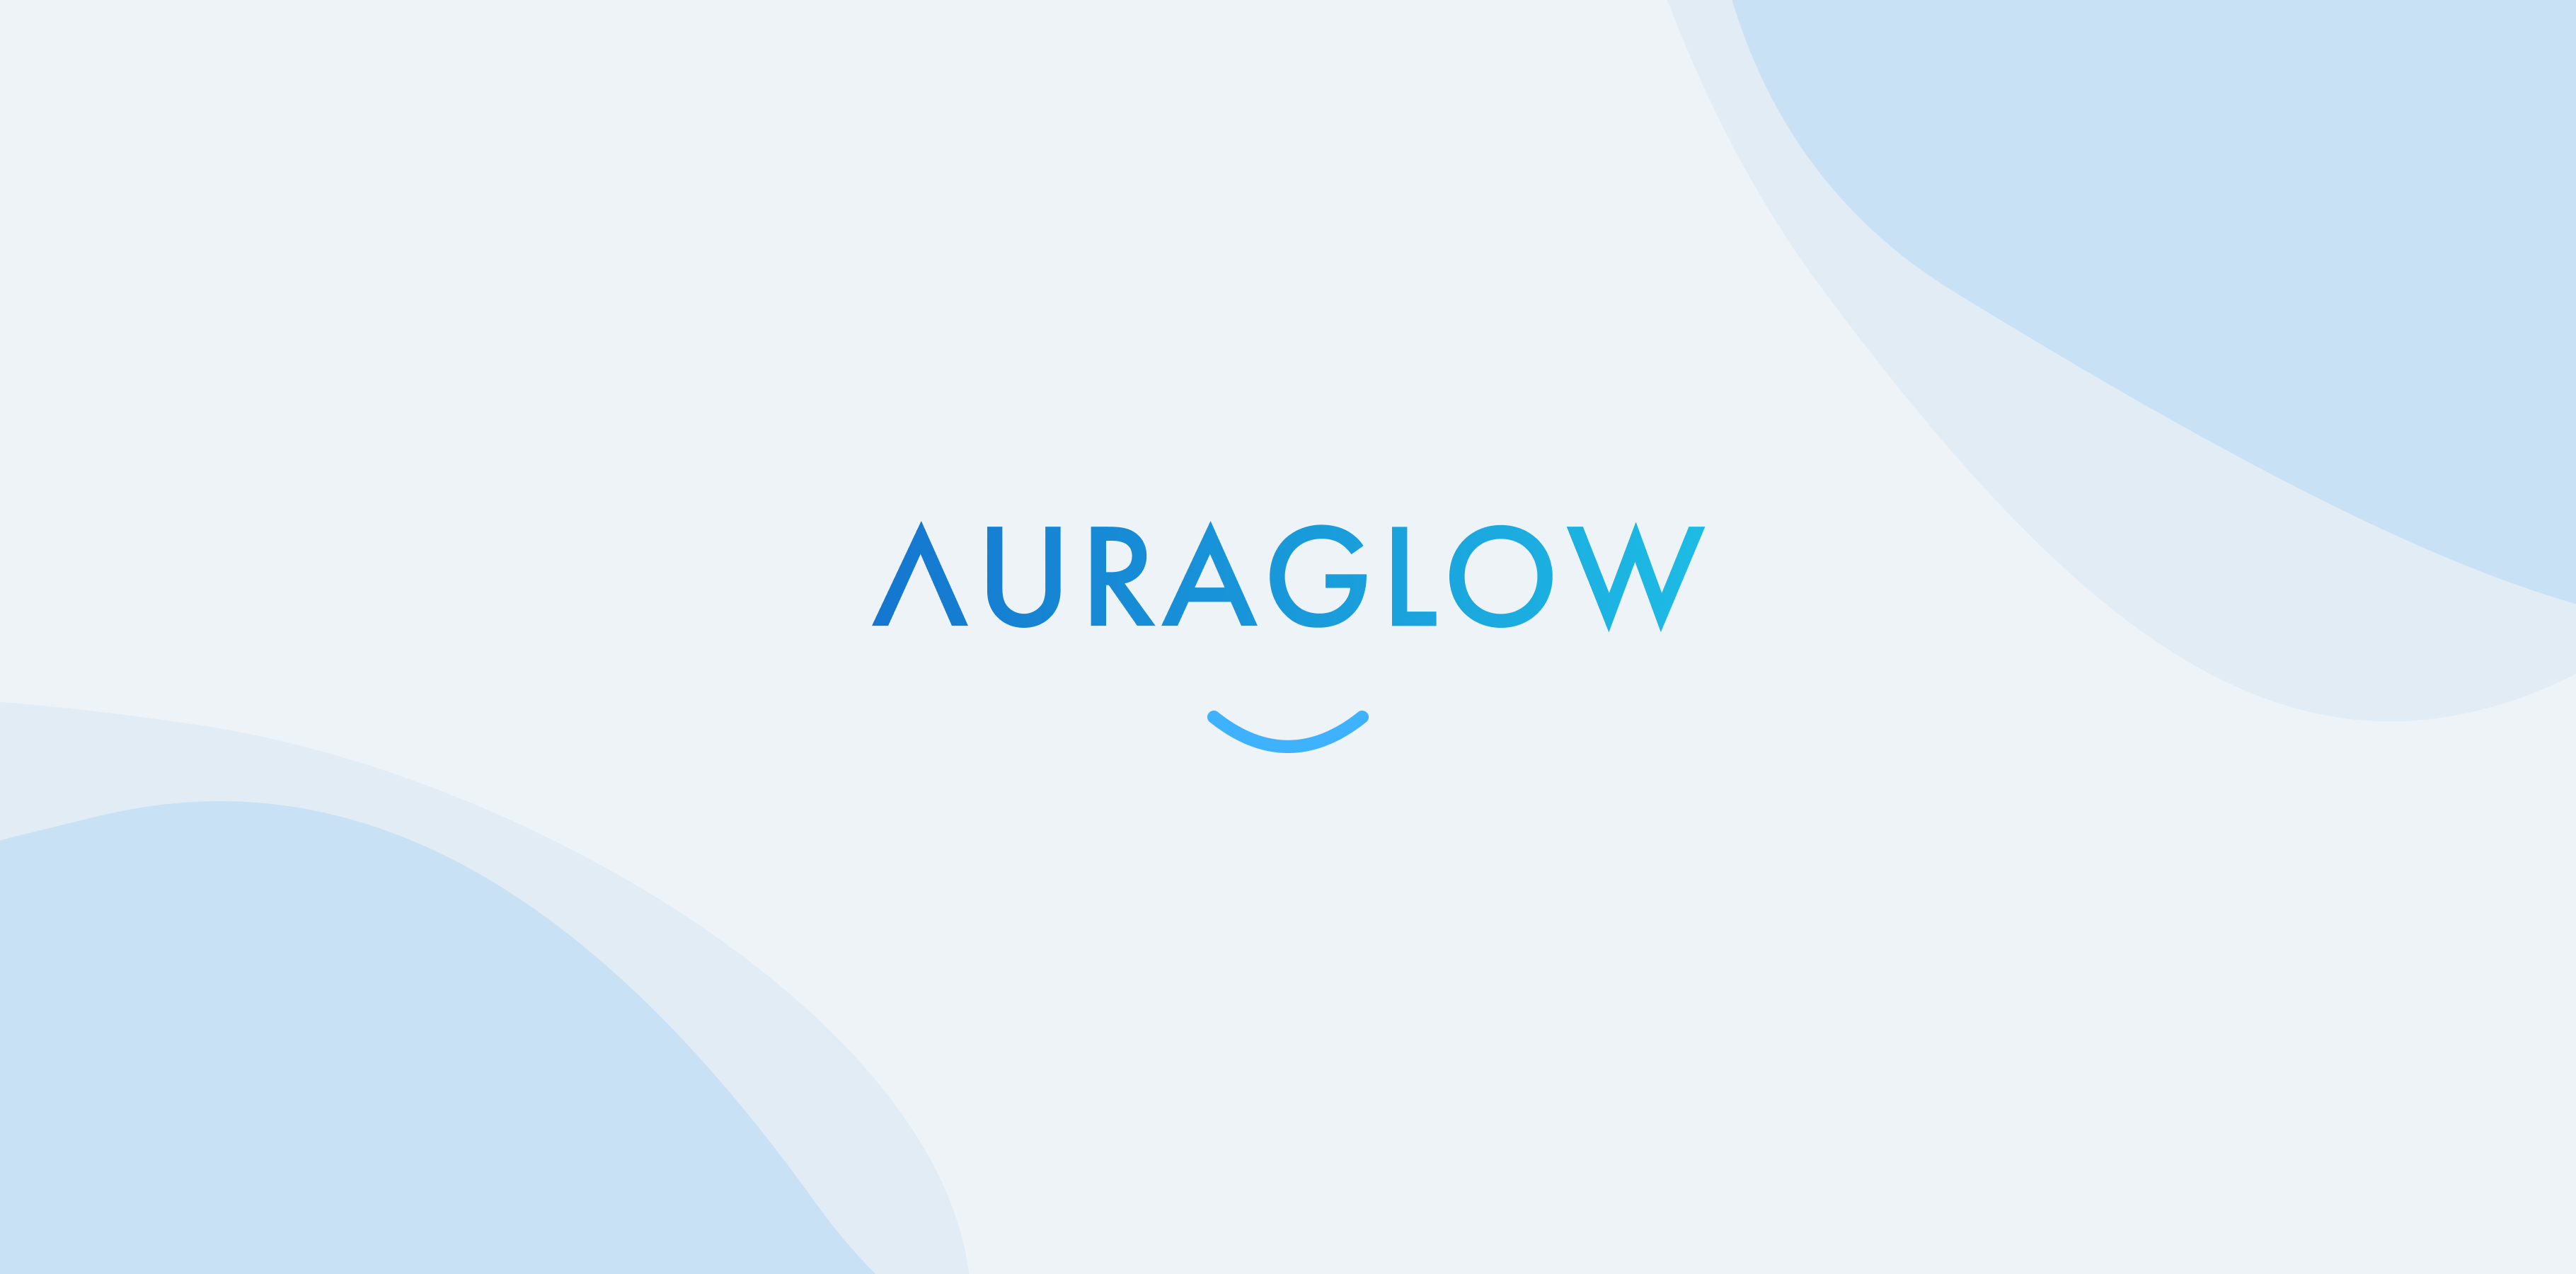 Auraglow AR app